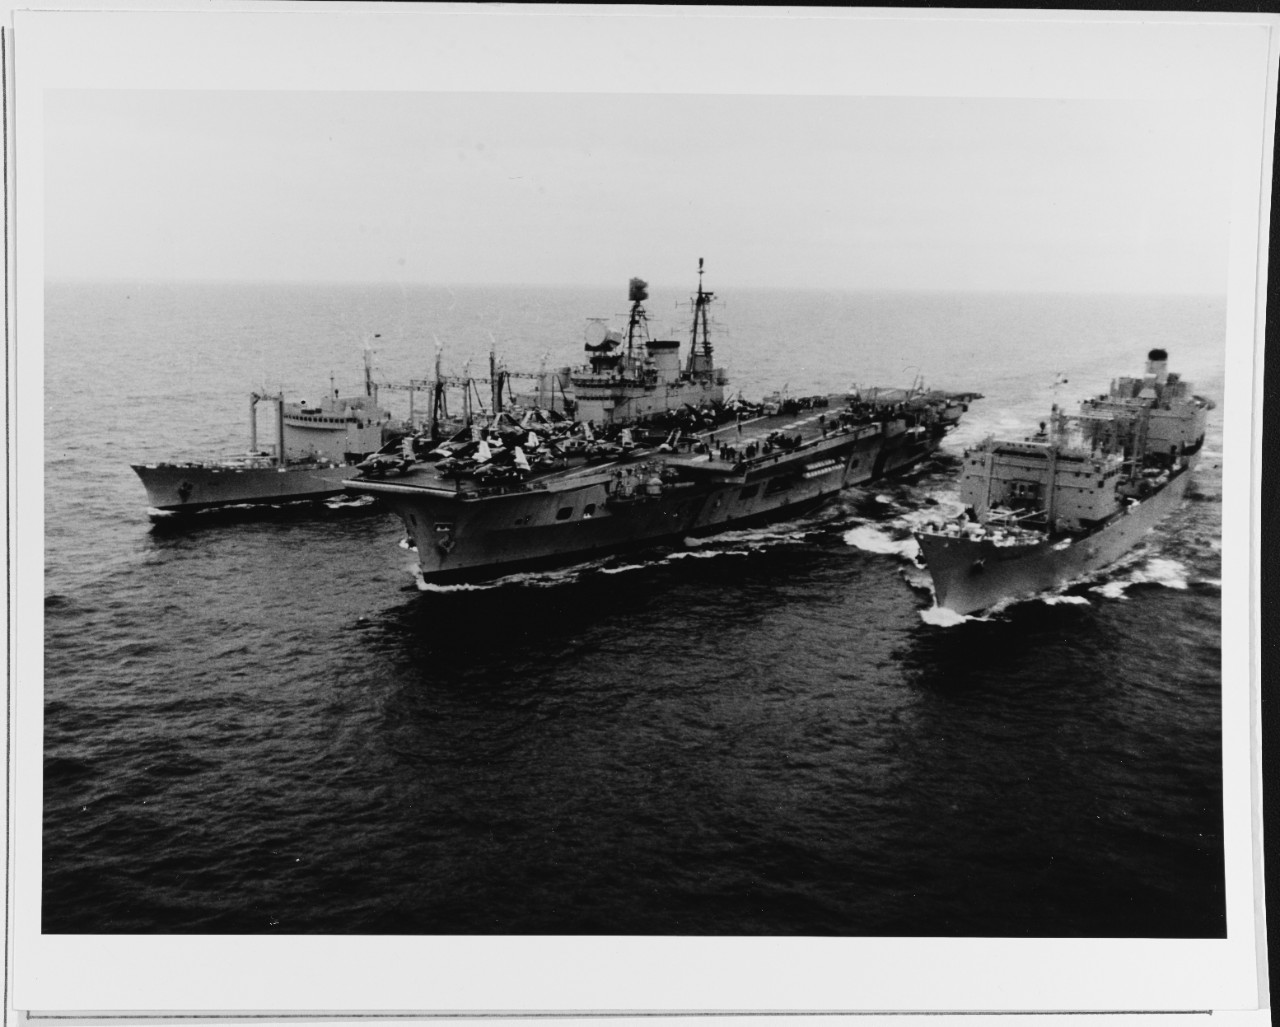 HMS OLNA, HMS EAGLE, and HMS RESOURCE